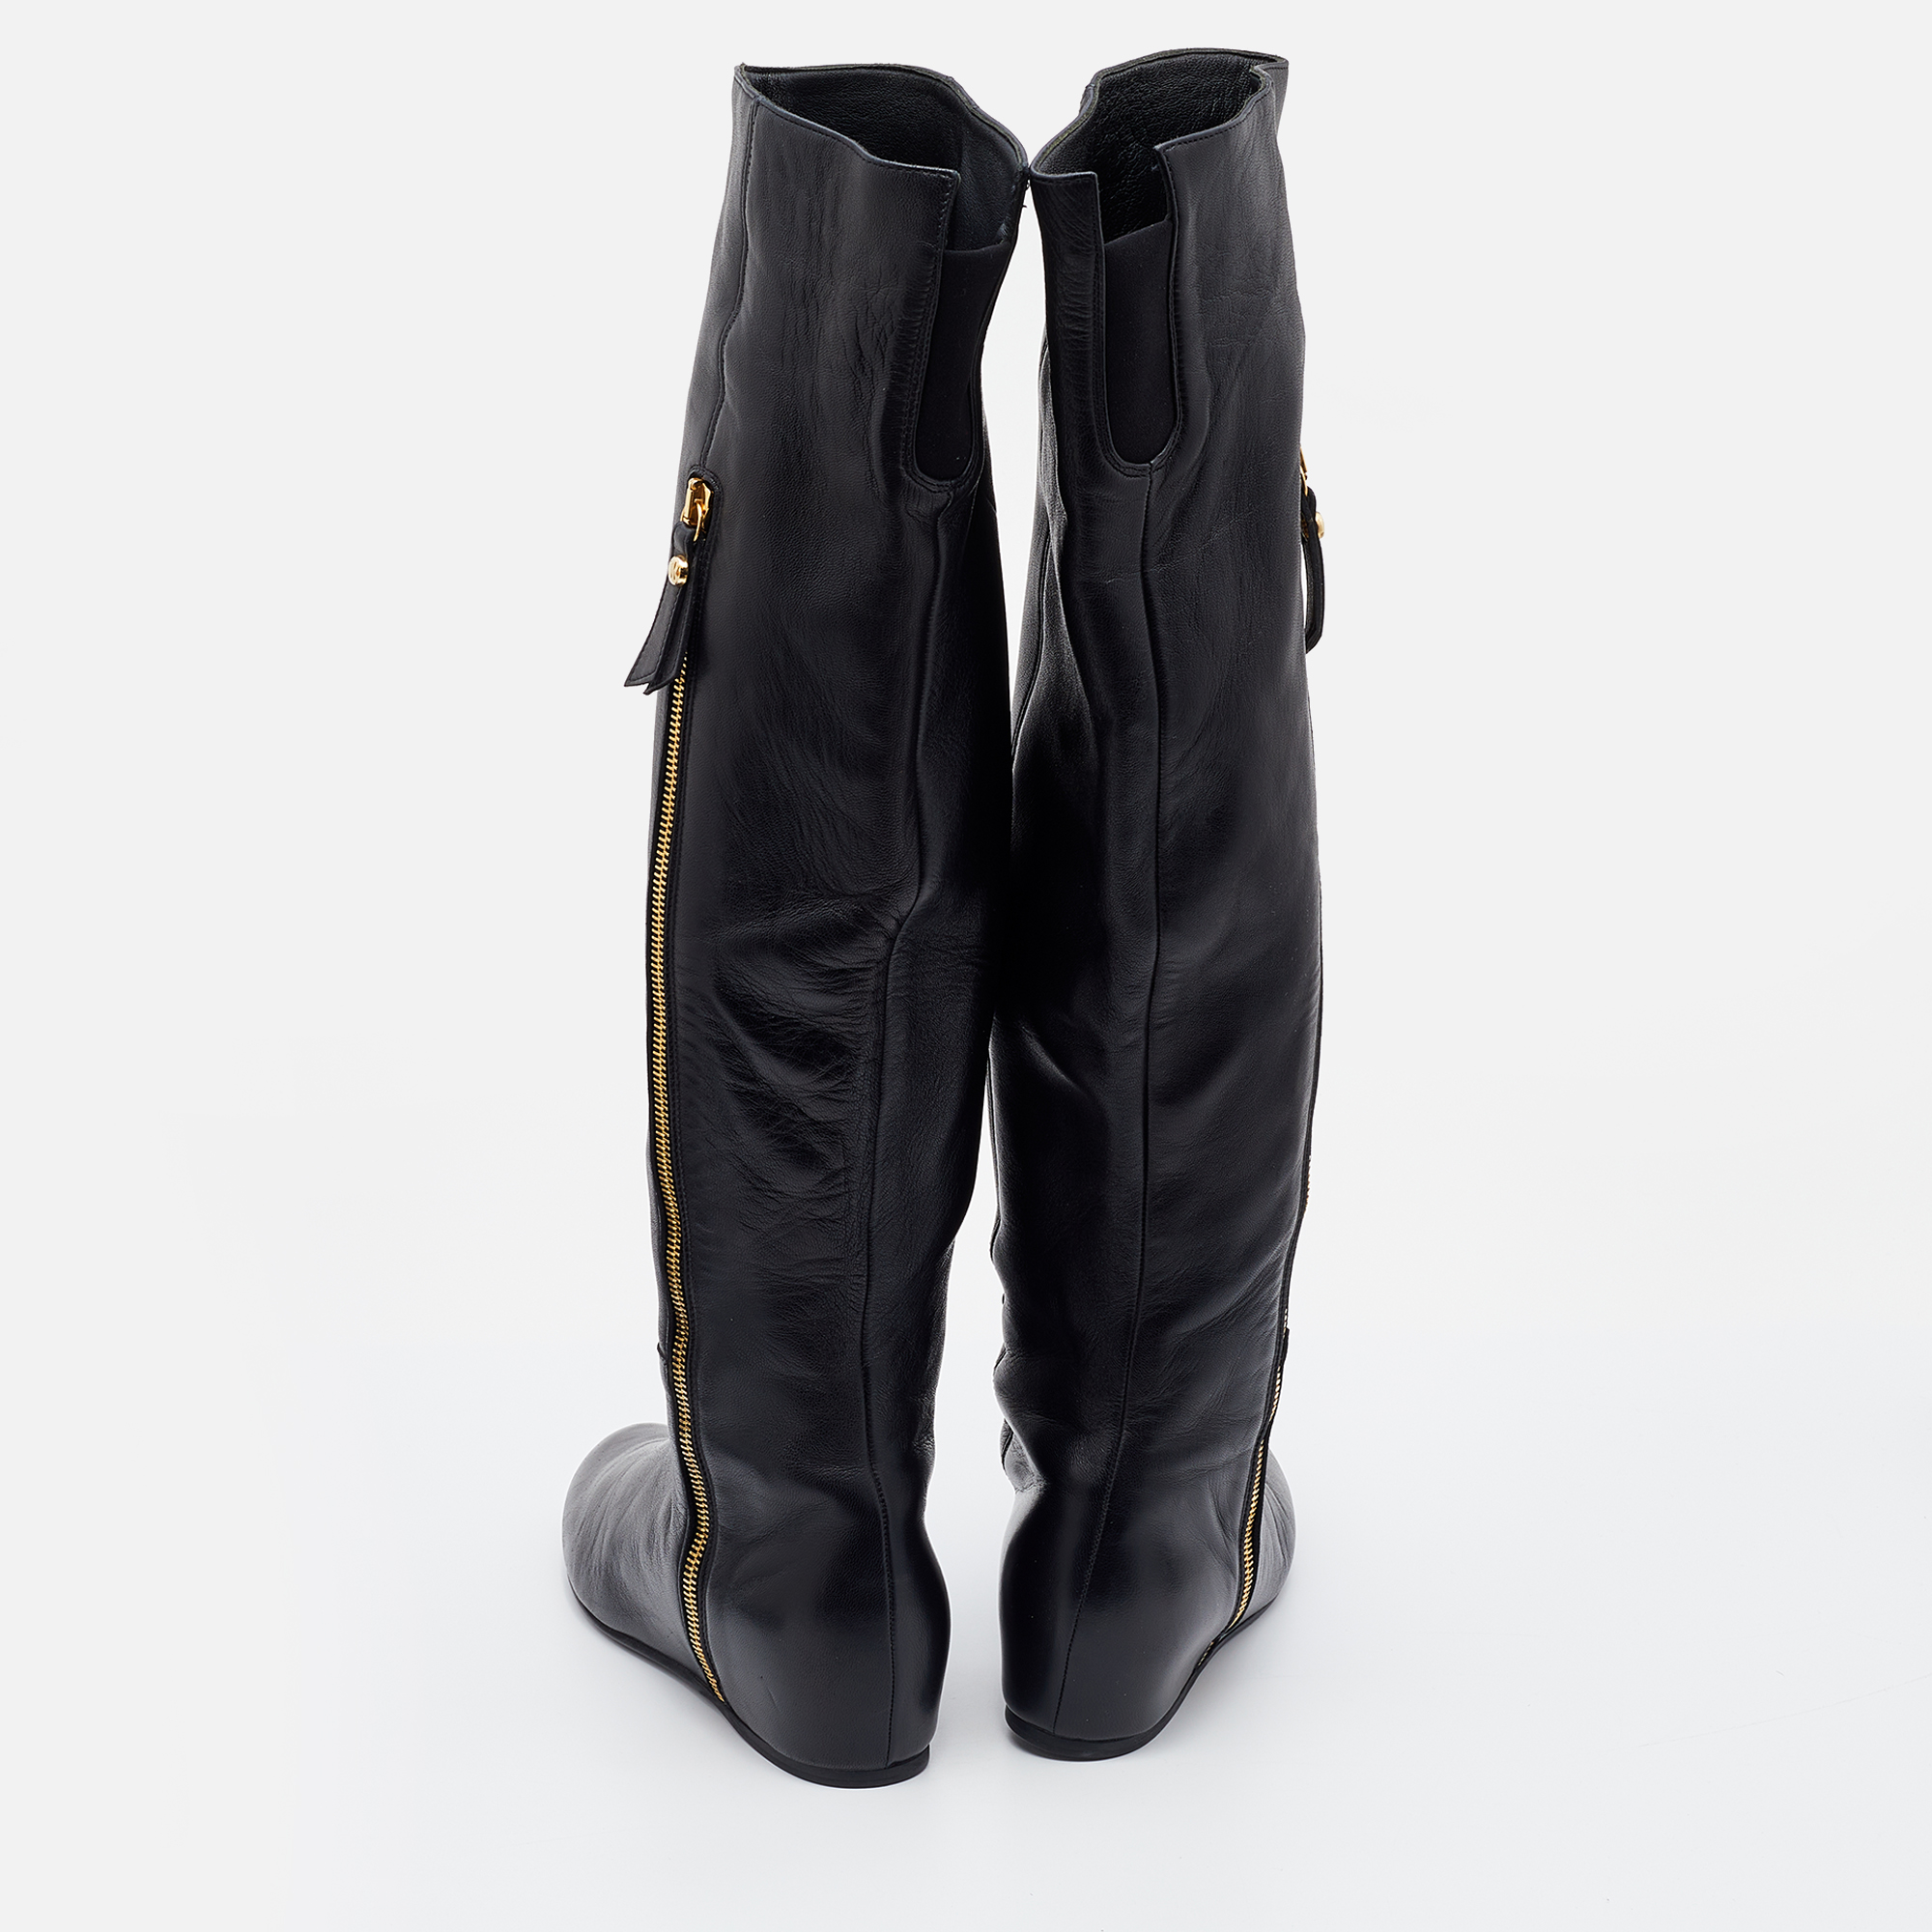 Stuart Weitzman Black Leather Knee Length Boots Size 34.5